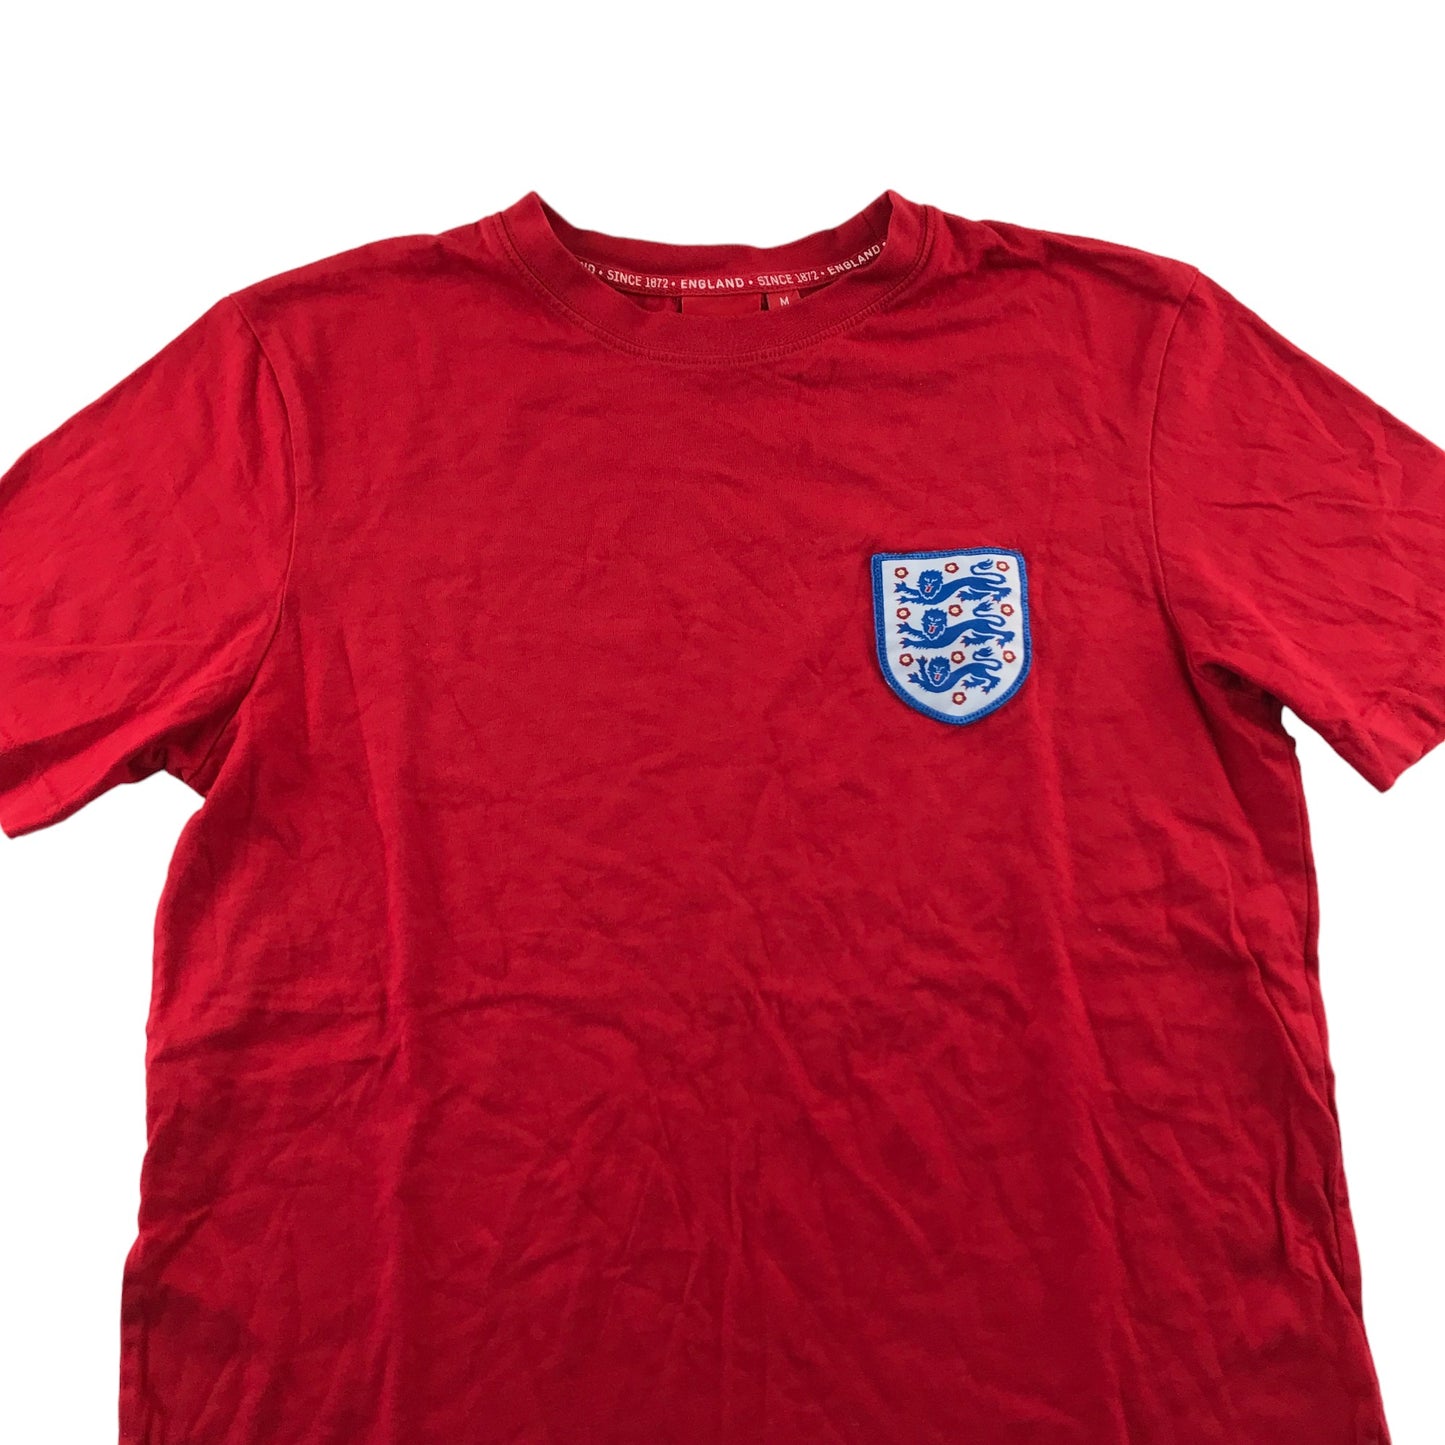 England T-shirt Size M Red Short Sleeve Three Lions Logo Cotton